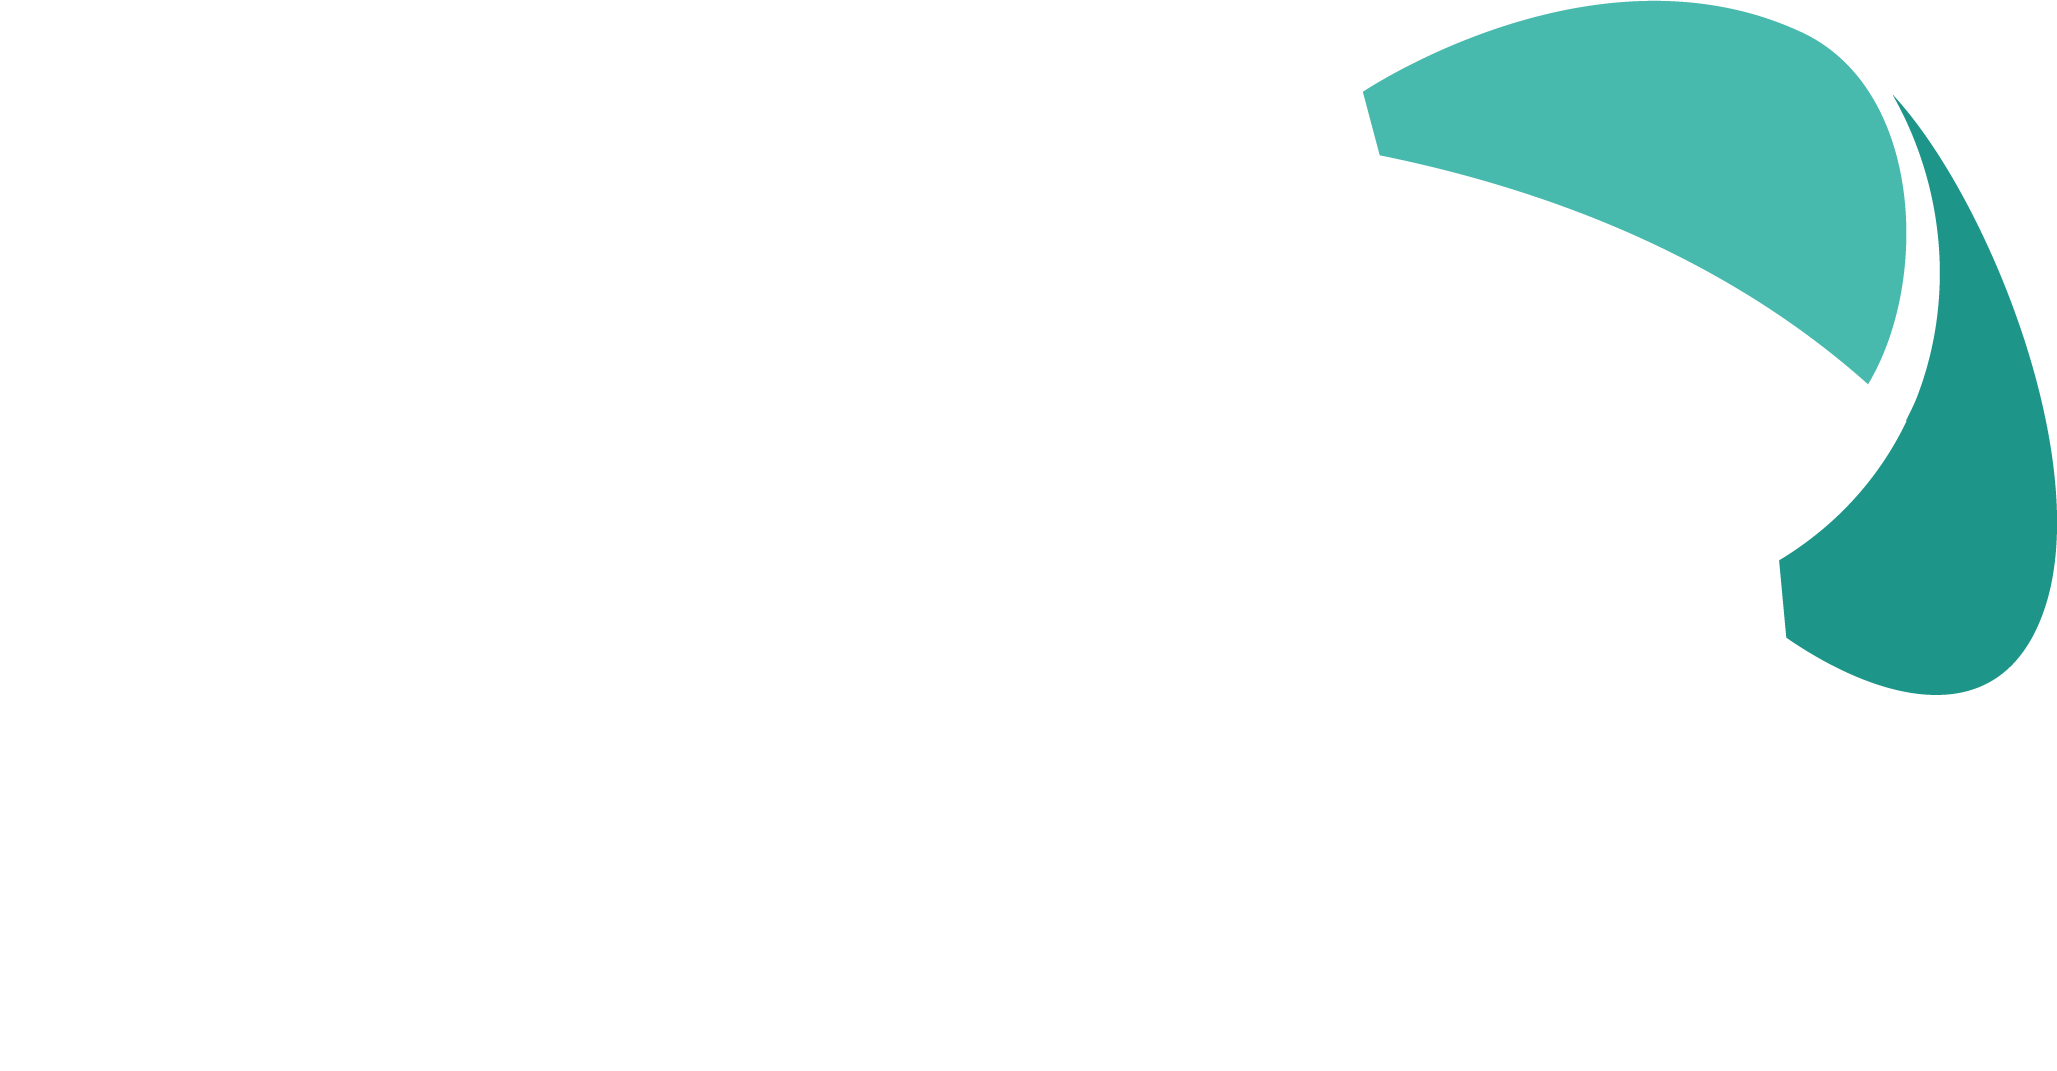 kyte logo